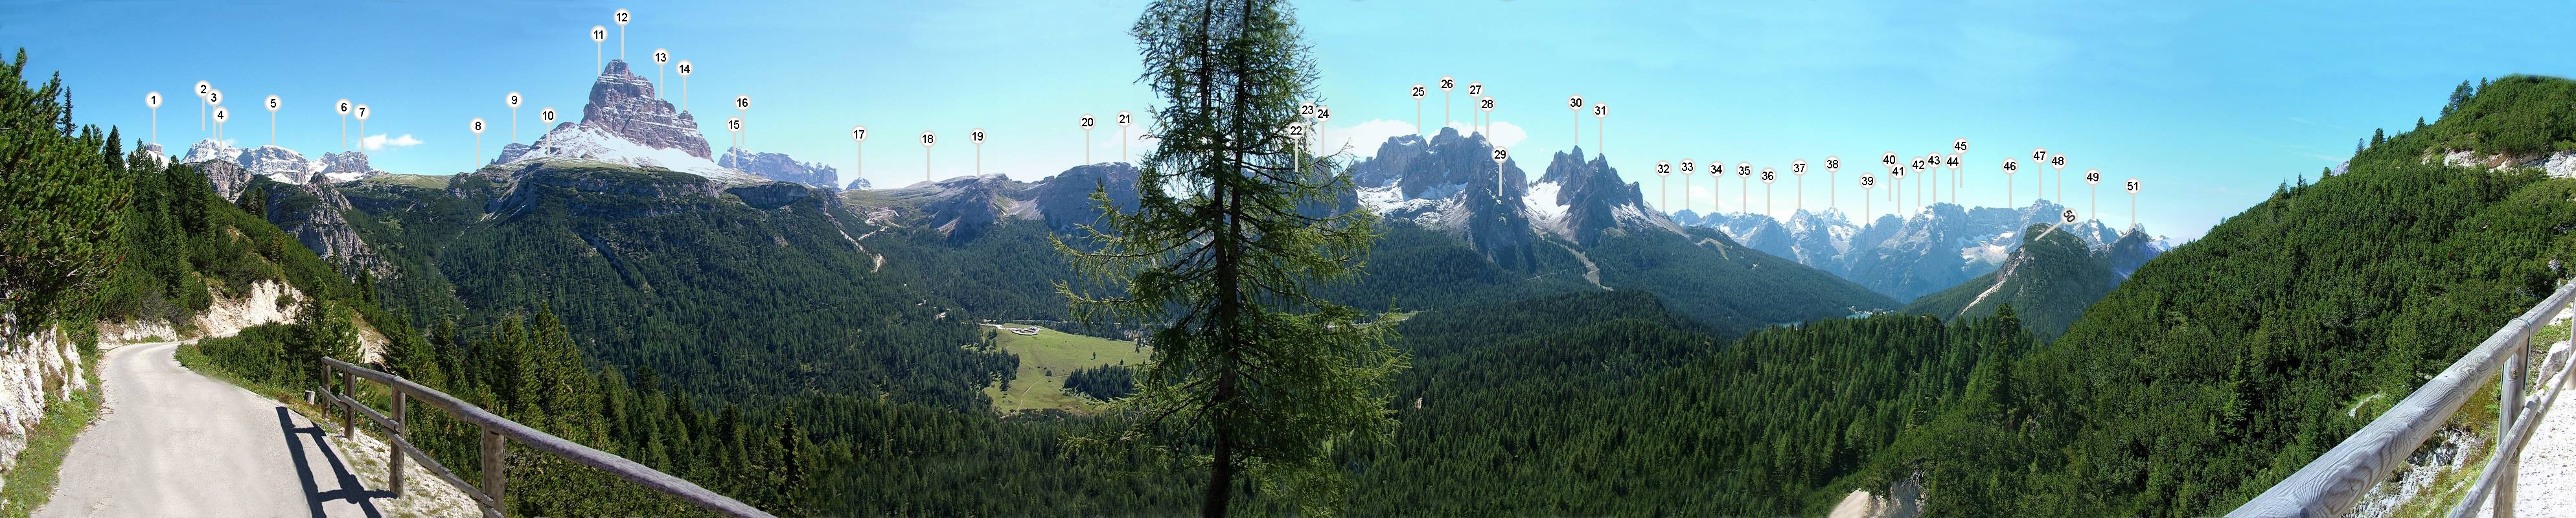 Noch ein wunderschönes Panoramabild vom Aufstieg zum Monte Piano. Folgendes ist zu sehen: (1) Schwabenalpenkopf [Torre dei Scarperi, 2687m], (2) Weißlahnspitze [P.ta Lavina Bianca, 2926m], (3) Schusterplatte [Lastron dei Scarperi, 2957m], (4) Katzenleitenkopf [Croda de l' Arghena, 2251m], (5) Innichriedlknoten [Crodon di San Candido, 2891m], (6) Toblinger Knoten [Torre di Toblin, 2617m], (7) Sexterstein [Sasso di Sesto, 2539m], (8) Col de Mezo [2254m], (9) Paternkofel [M.Paterno, 2744m], (10) Forc. de l' Col de Mezo [2324m], aus der Gruppe Drei Zinnen: (11) Zinnenkopf [Sasso de Landro, 2736m], (12) Westl. Zinne [Occille Cime, 2973m], (13) Grosse Zinne [Grande Cime, 2999m], (14) Kleine Zinne [Pic la Cime, 2792m]; dann die (15) Auronzohütte, (16) M. Cengia [2559m], (17) Zwölferkofel [Croda dei Toni, 3094m]; aus der Gruppe Cadini di Misurina: (18) Le Cianpedele [2346m], (19) Col de le Bisse [2280m], (20) C. Ciadin de le Bisse [2356m], (21) C. Ciadin de Rinbianco [2402m]; (22) Cime Ciadin dei Tocci [2473m], (23) Cimon di Croda Liscia [2568m], (24) T.Wundt [2517m], (25) ohne Namen [2711m], (26) Nord Est [2788m], (27) C.ma Cadin di S. Lucano [2839m], (28) Nord Ovest [2726m], (29) Cima d. Antorno [2418m], (30) Cima Ciadin de la Neve [2757m]; (31) C.ma Cadin di Misurina [2674m], aus der Gruppo delle Marmarole: (32) M. Meduc [2402m], (33) Cima Chiavina [2782m], (34) Cim Orsolina [2803m], (35) Cresta Vanedel [2725m], (36) Croda Rotta [2632m], (37) Croda di Marchi [2769m], (38) C. Nosoio [2806m]; aus der Gruppe Costa Bel Pra: (39) Corno del Doge [2615m], (40) C. Nord [2862m], (41) C. Süd [2825m]; aus der Gruppo del Sorapis: (42) Torri de Busa [2638m], (43) Cime di Valbona [2899m], (44) Le tre Sorella - Terza [2999m], (45) Le tre Sorella - Prima [3005m], (46) Crodes de ra Caza Granda [3002m], (47) Ponta del Sorapis [3205m], (48) C. de Falkner [3053m], (49) Ponte Negra [2847m]; und dann aus der Gruppe Pale de Mesorina: (50) M. Popena [2224m] und dann noch (51) ohne Namen [2300m].